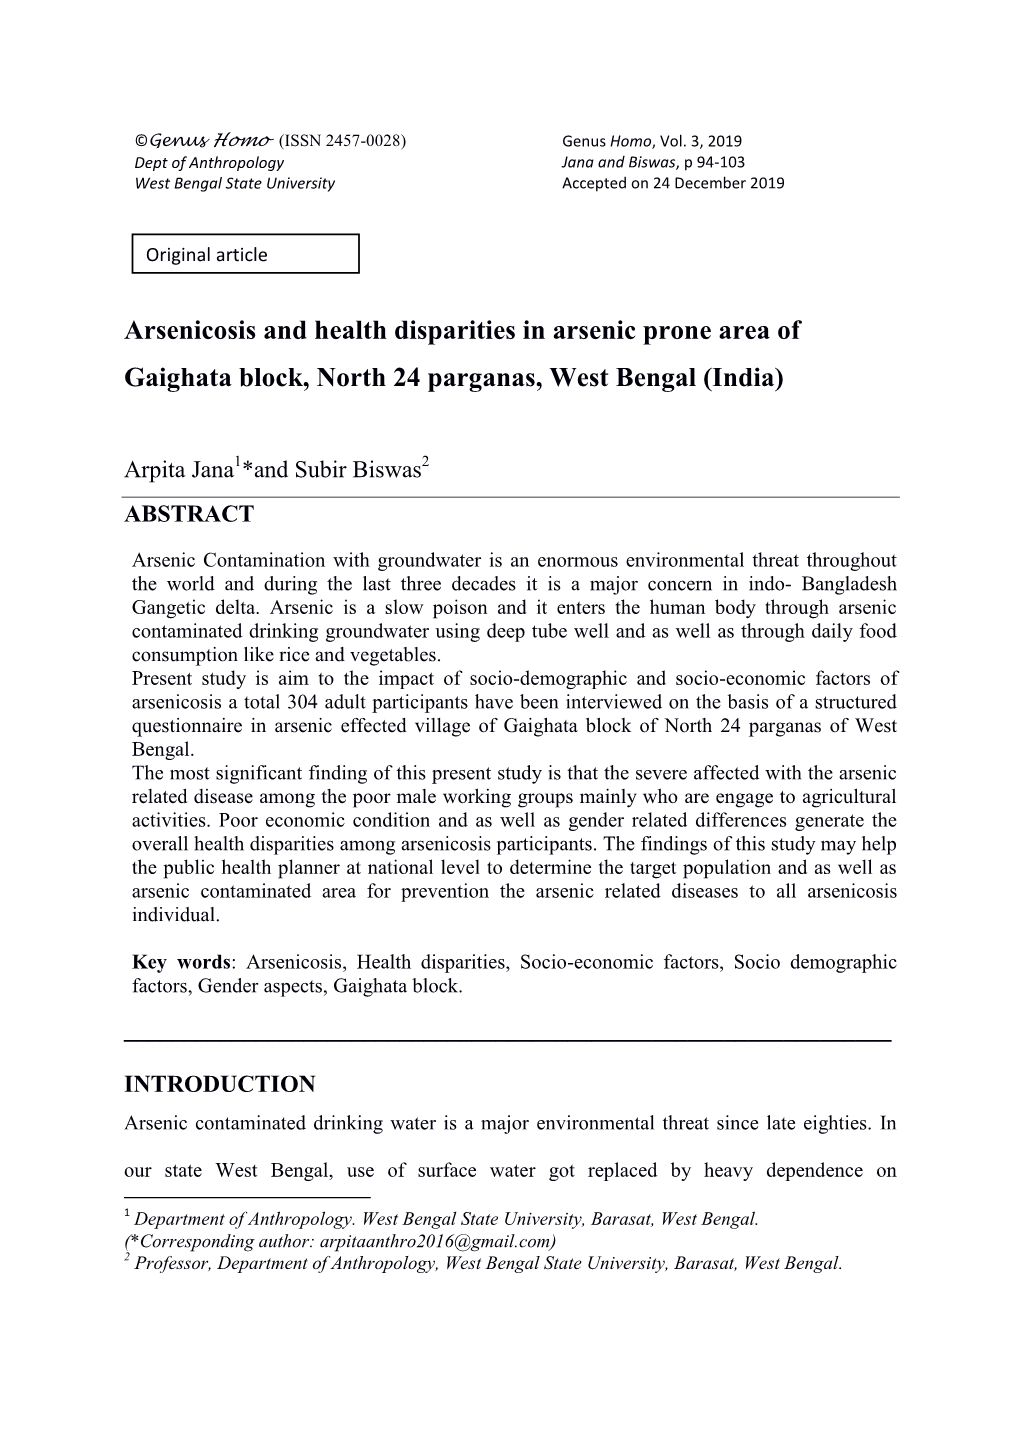 Arsenicosis and Health Disparities in Arsenic Prone Area of Gaighata Block, North 24 Parganas, West Bengal (India)